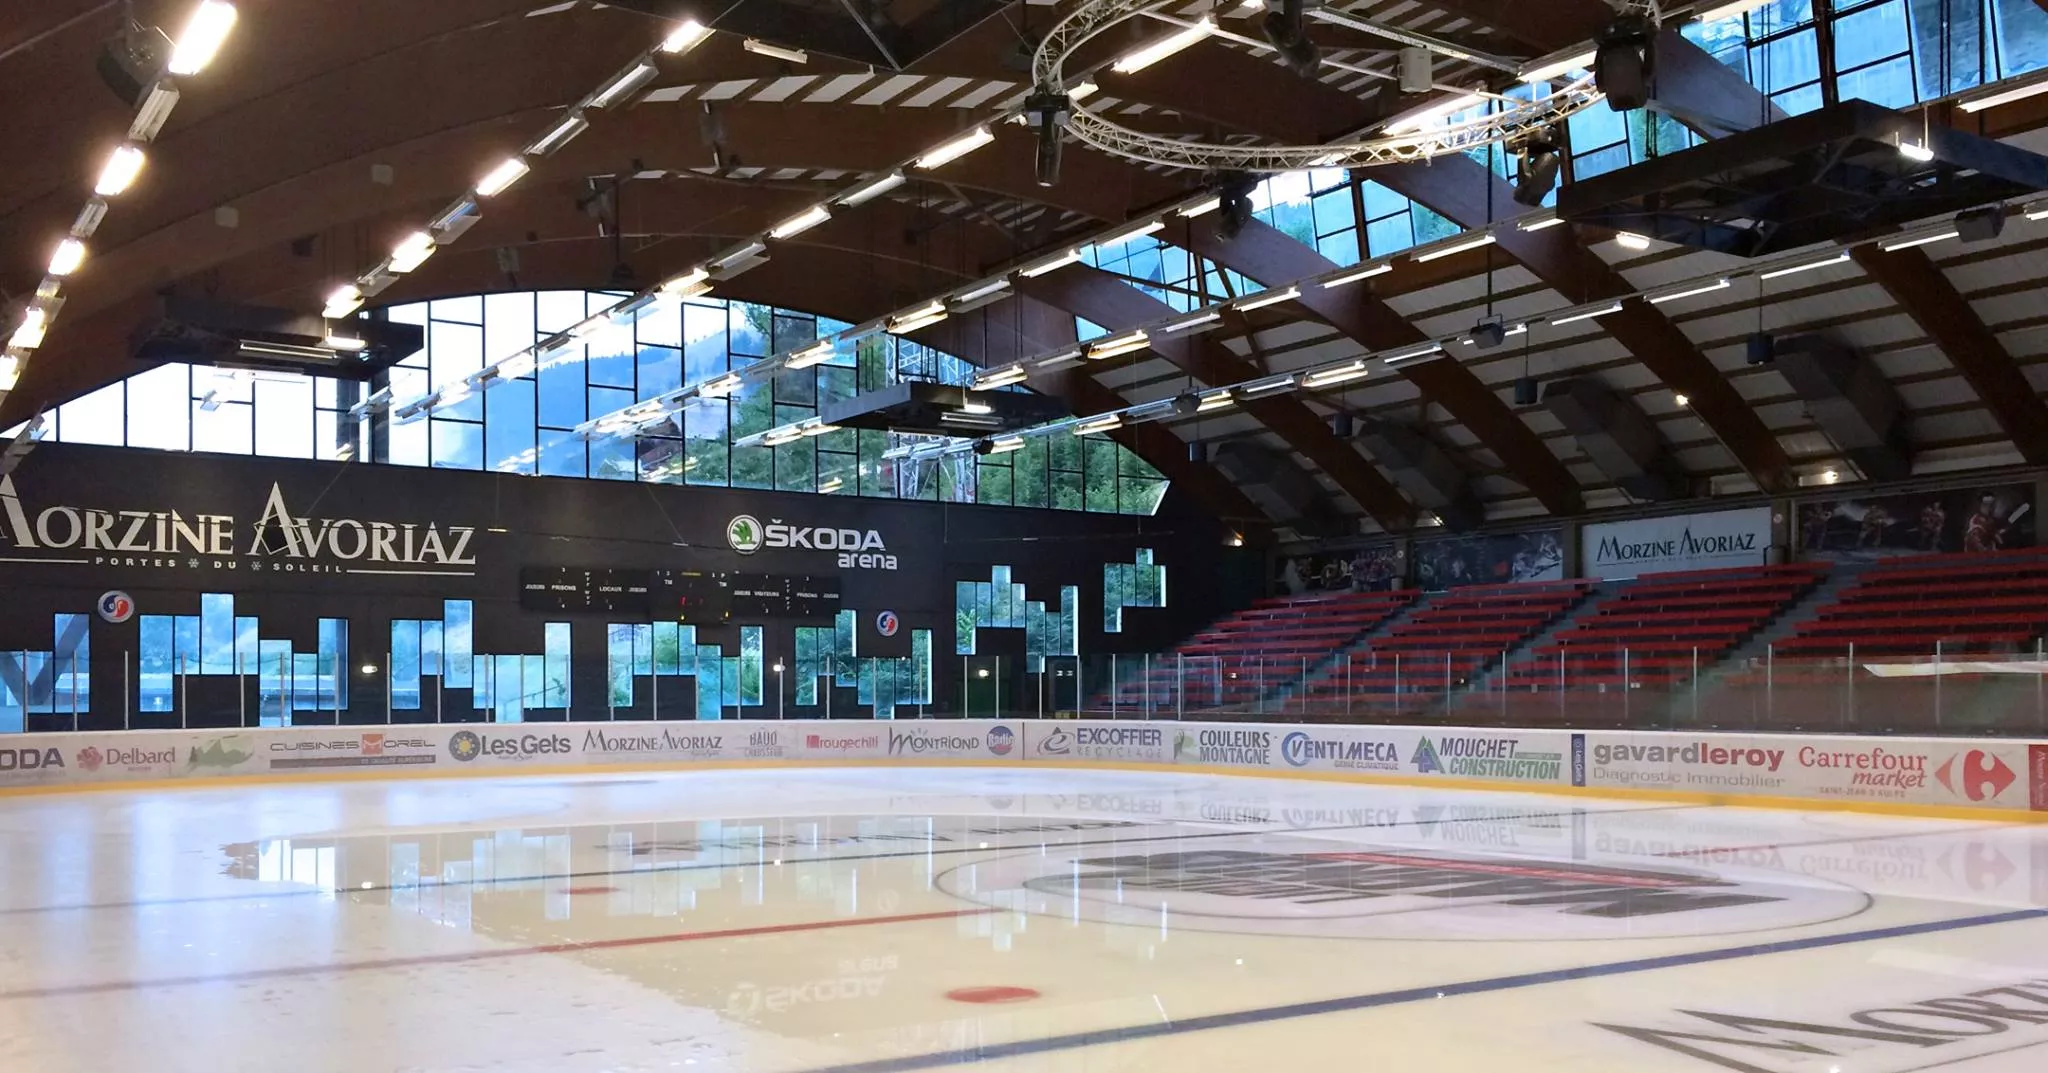 Skoda Arena Ice Skating Rink in France, Europe | Skating - Rated 0.8